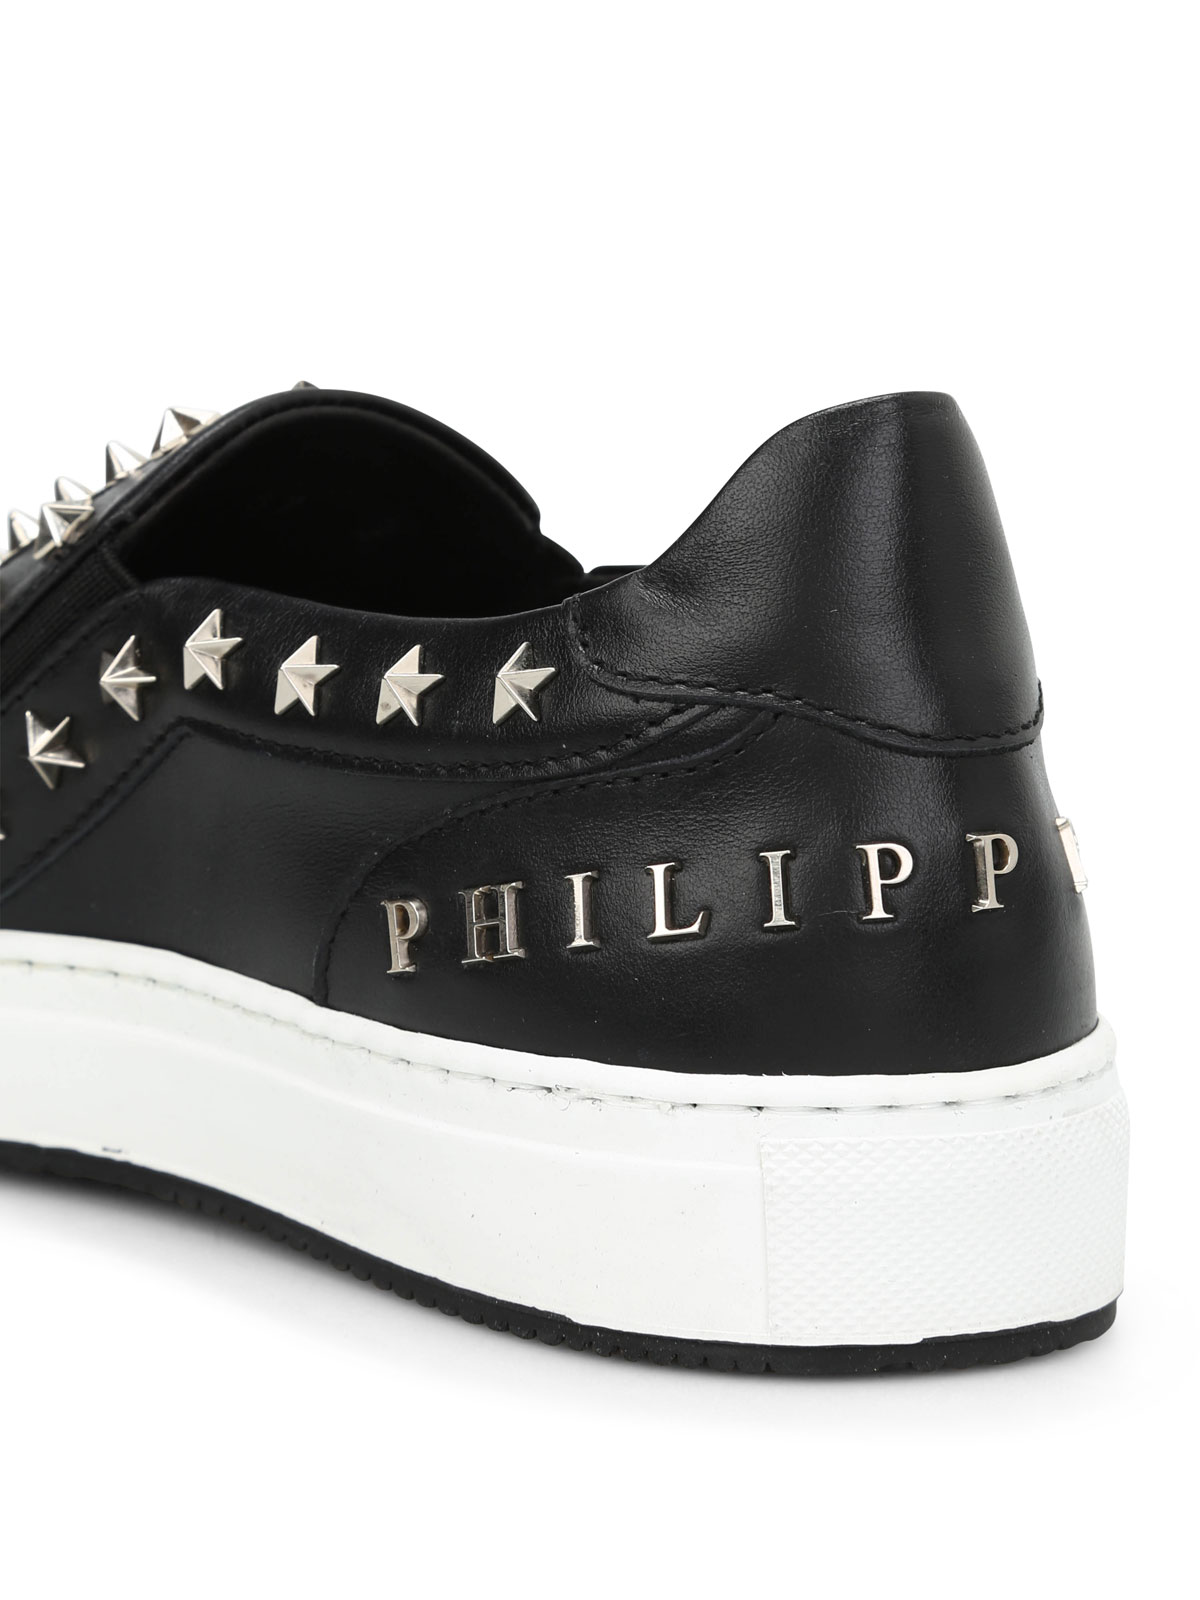 philipp plein slip on shoes